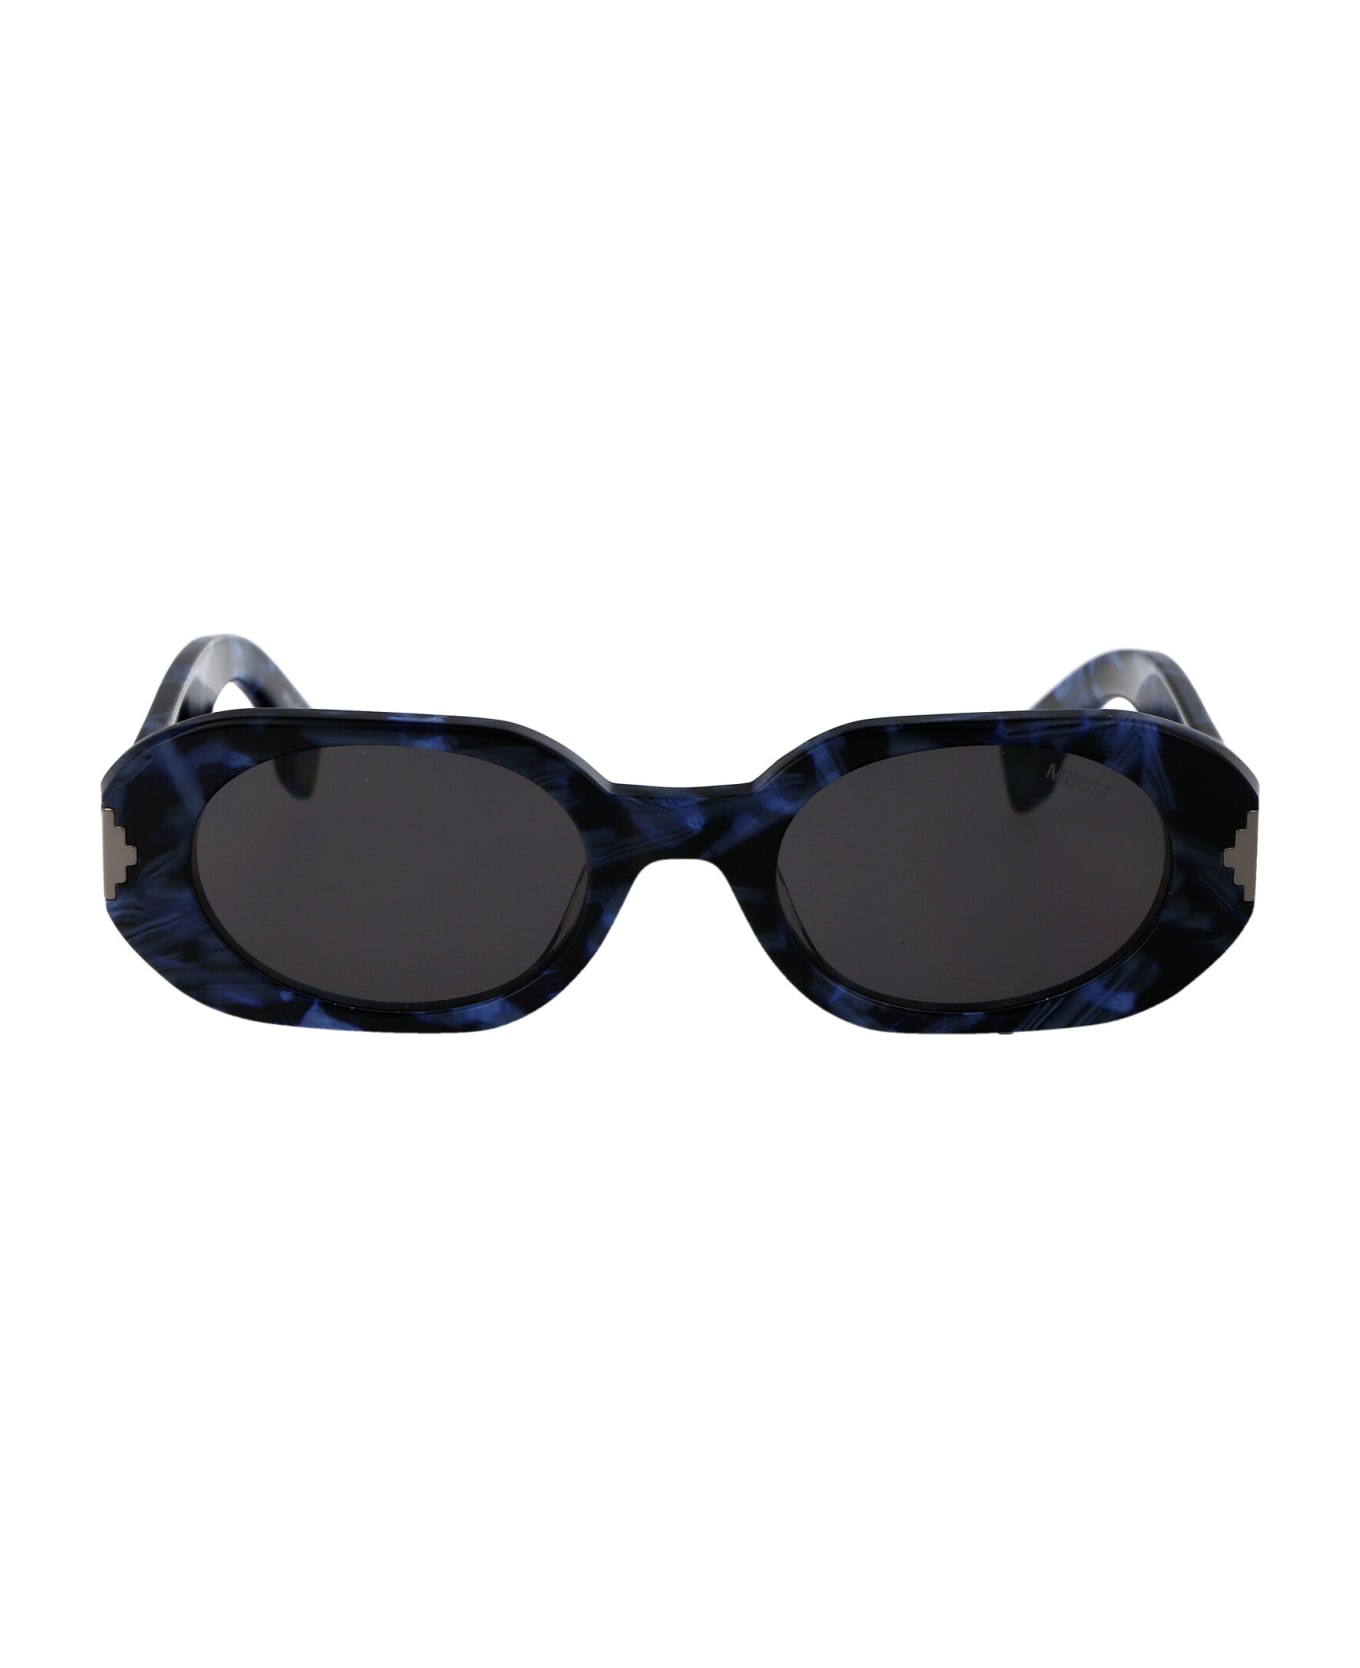 Marcelo Burlon Nire Sunglasses - 4107 HAVANA BLUE  